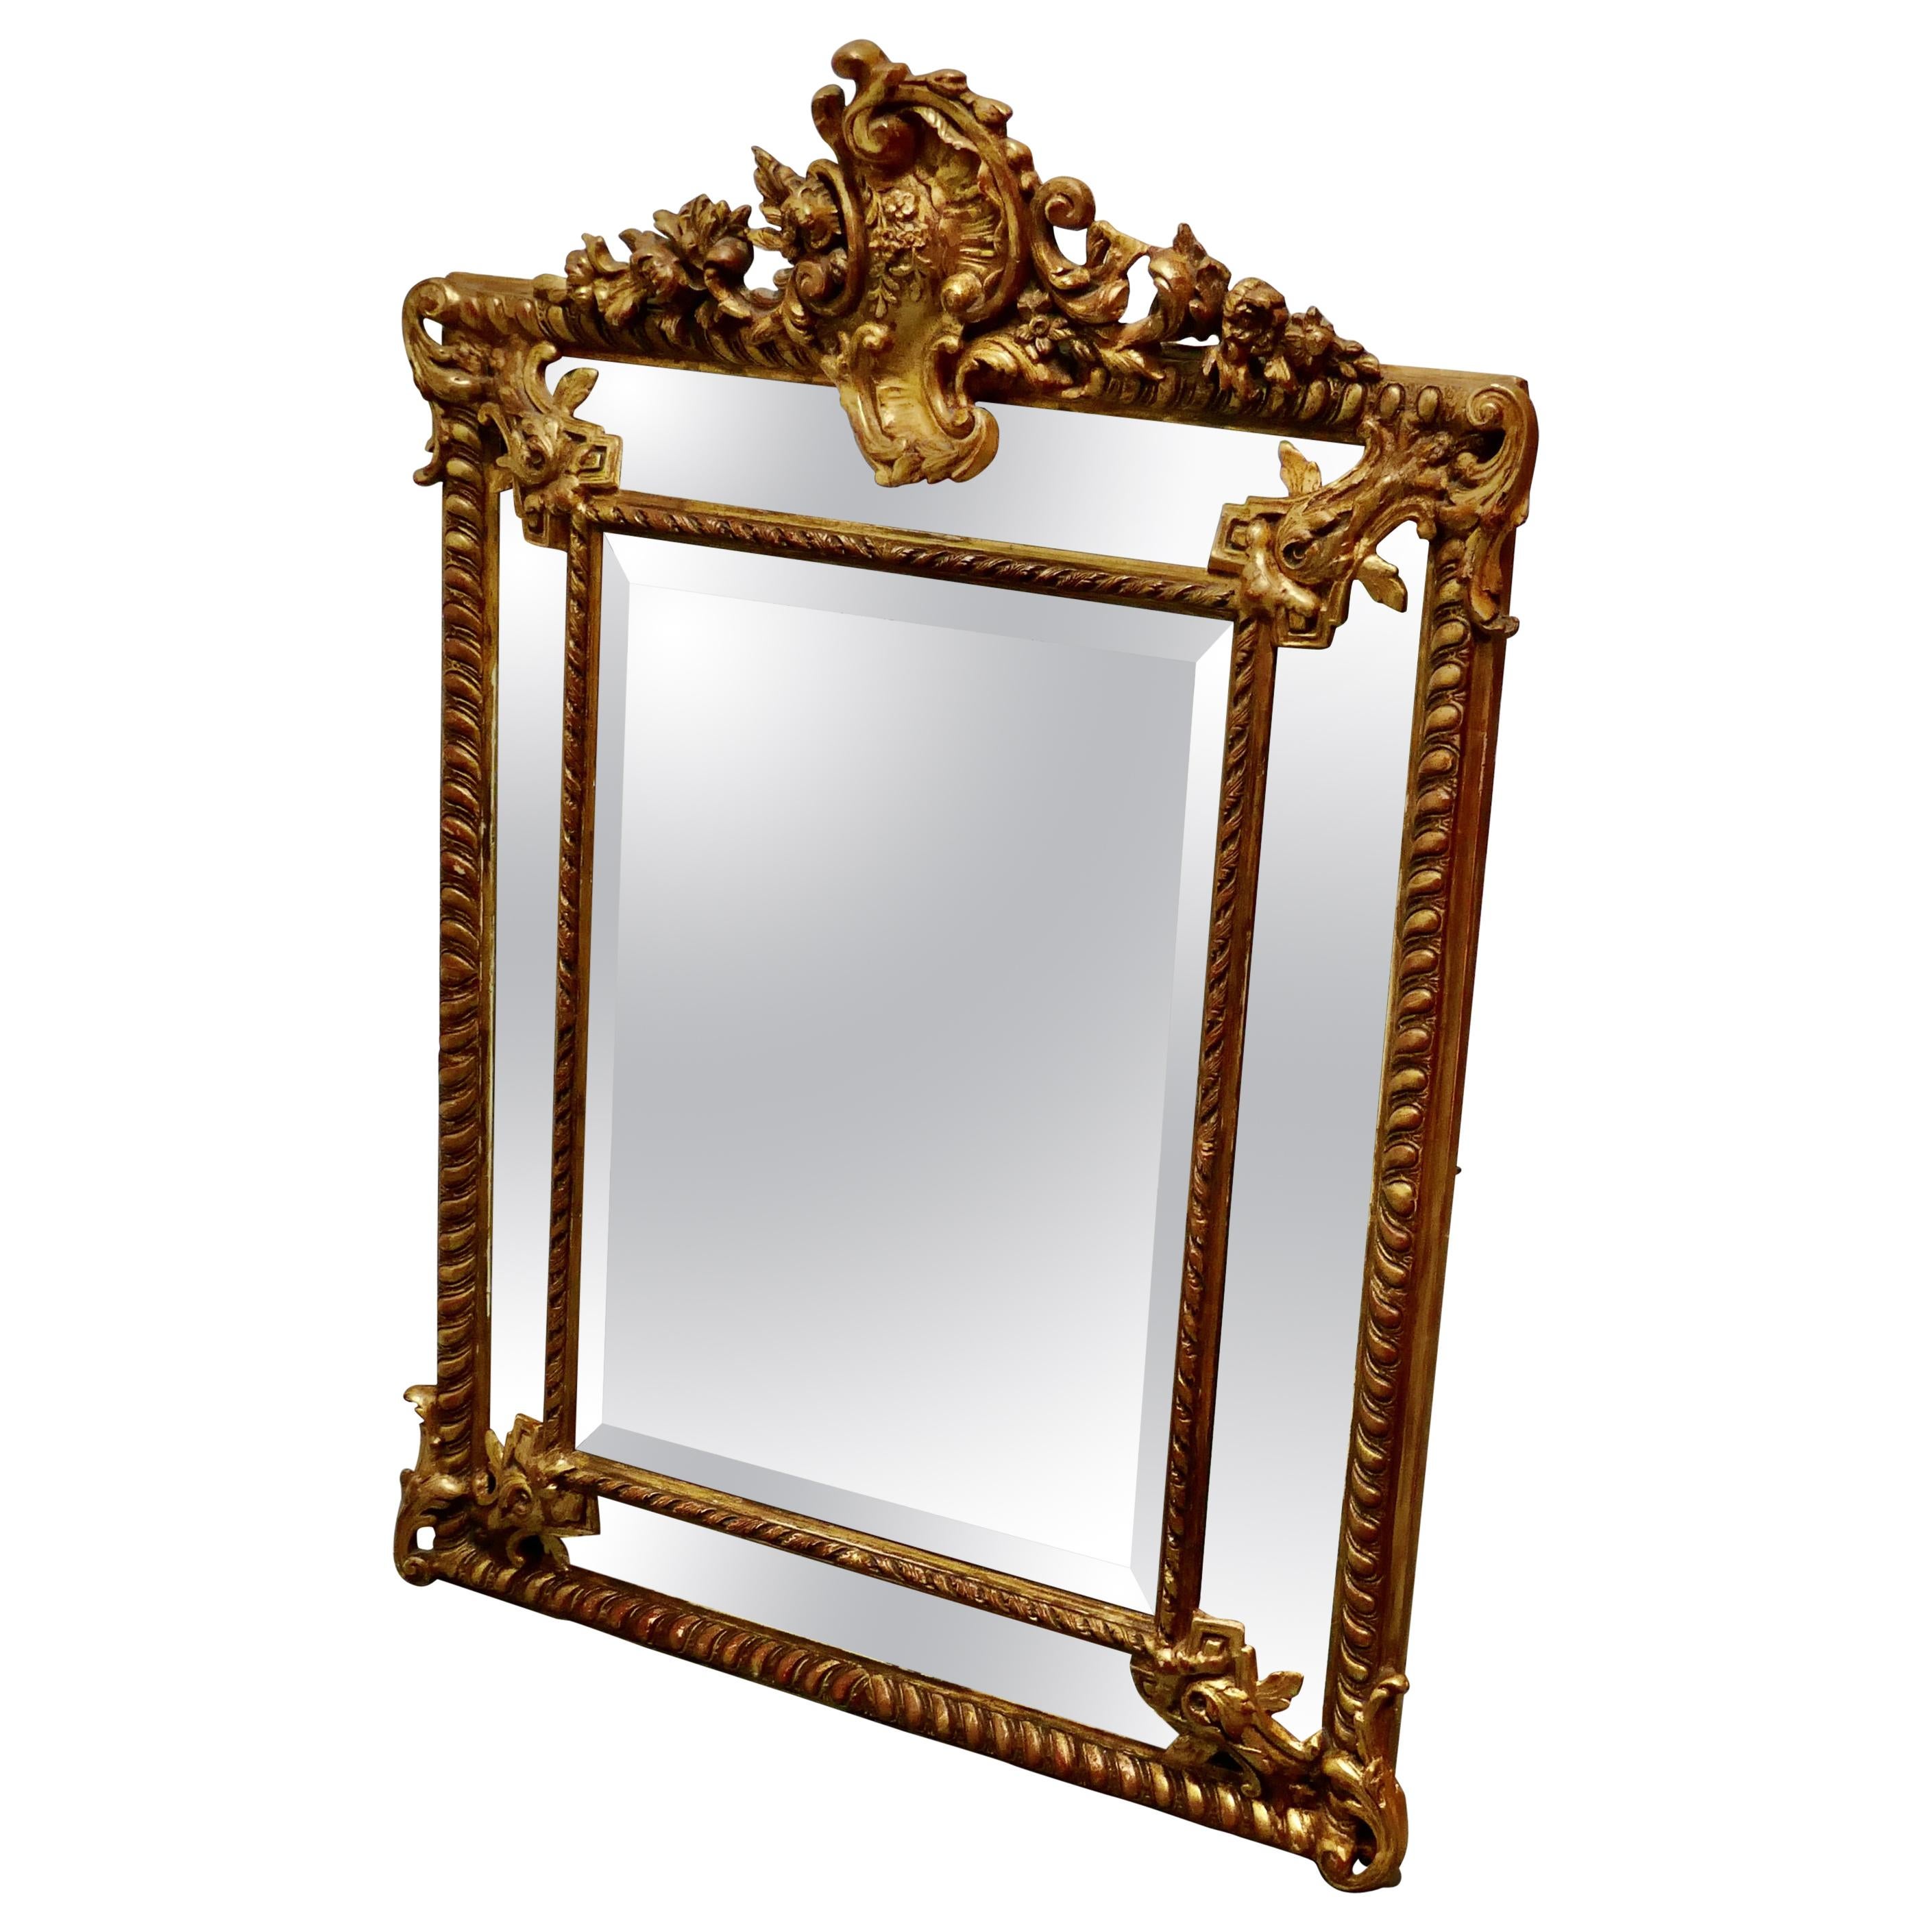 Stunning Napoleon III French Cushion Mirror